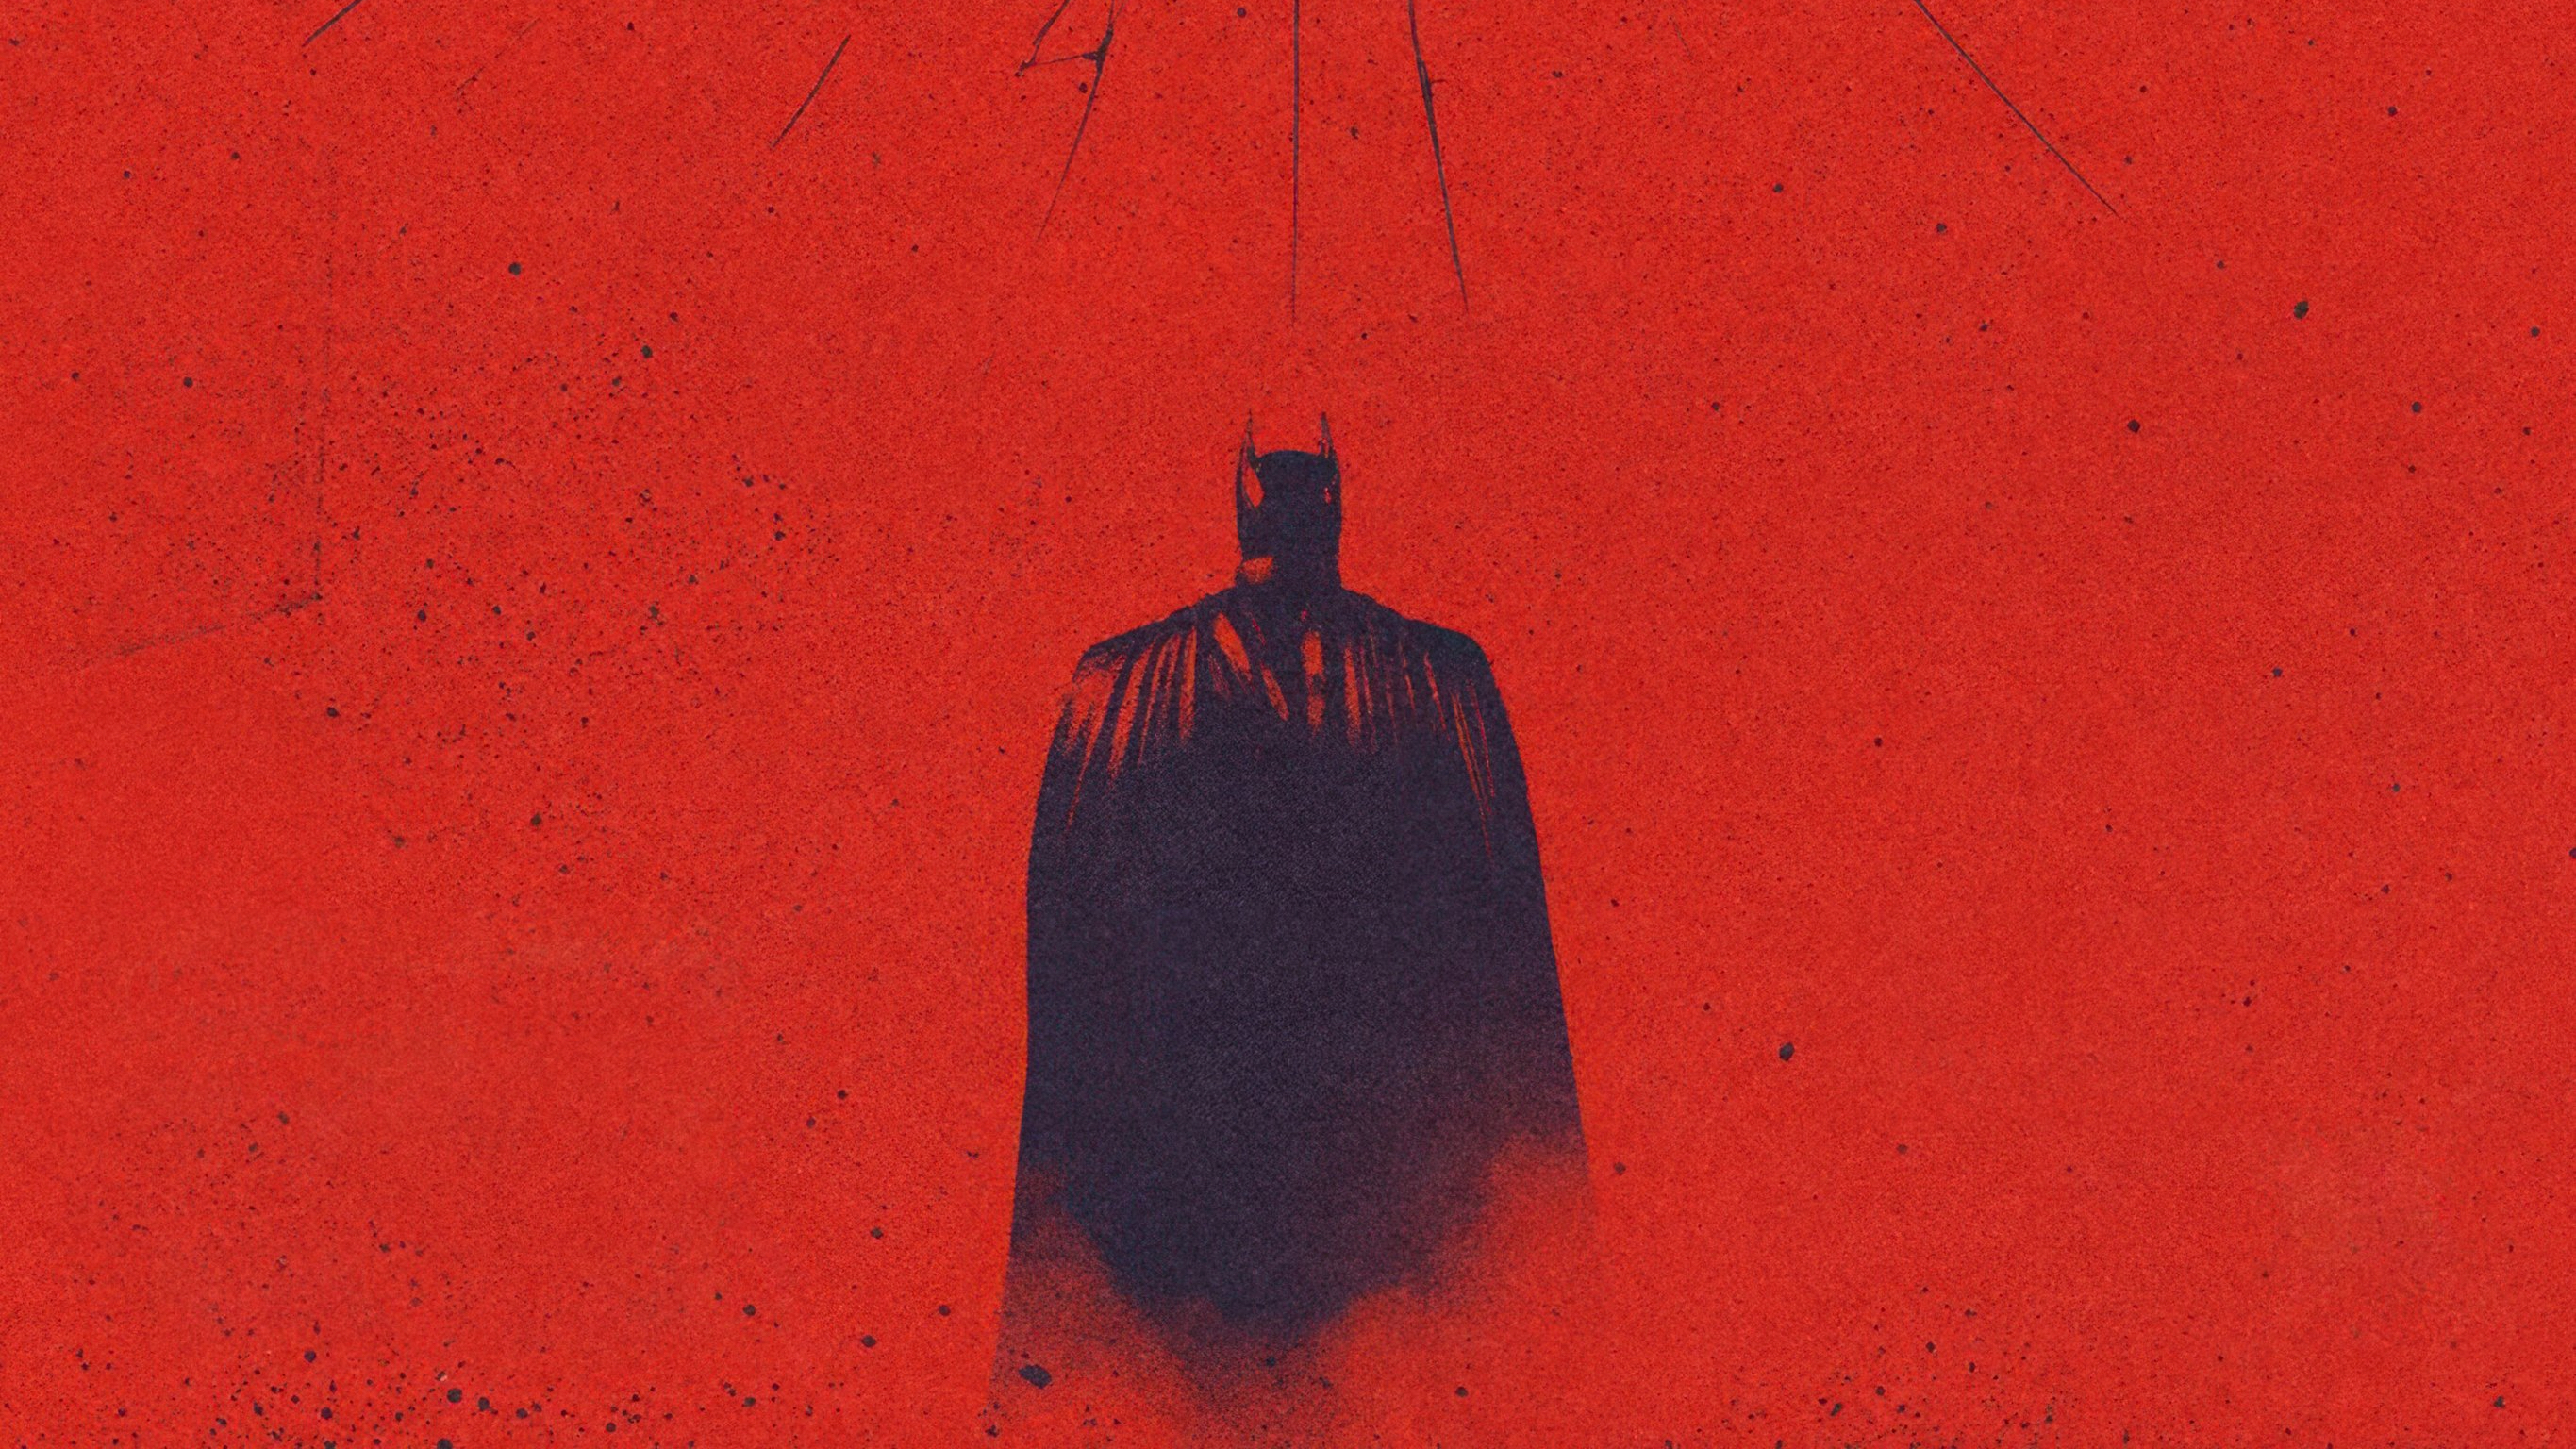 100+] Batman 4k Backgrounds